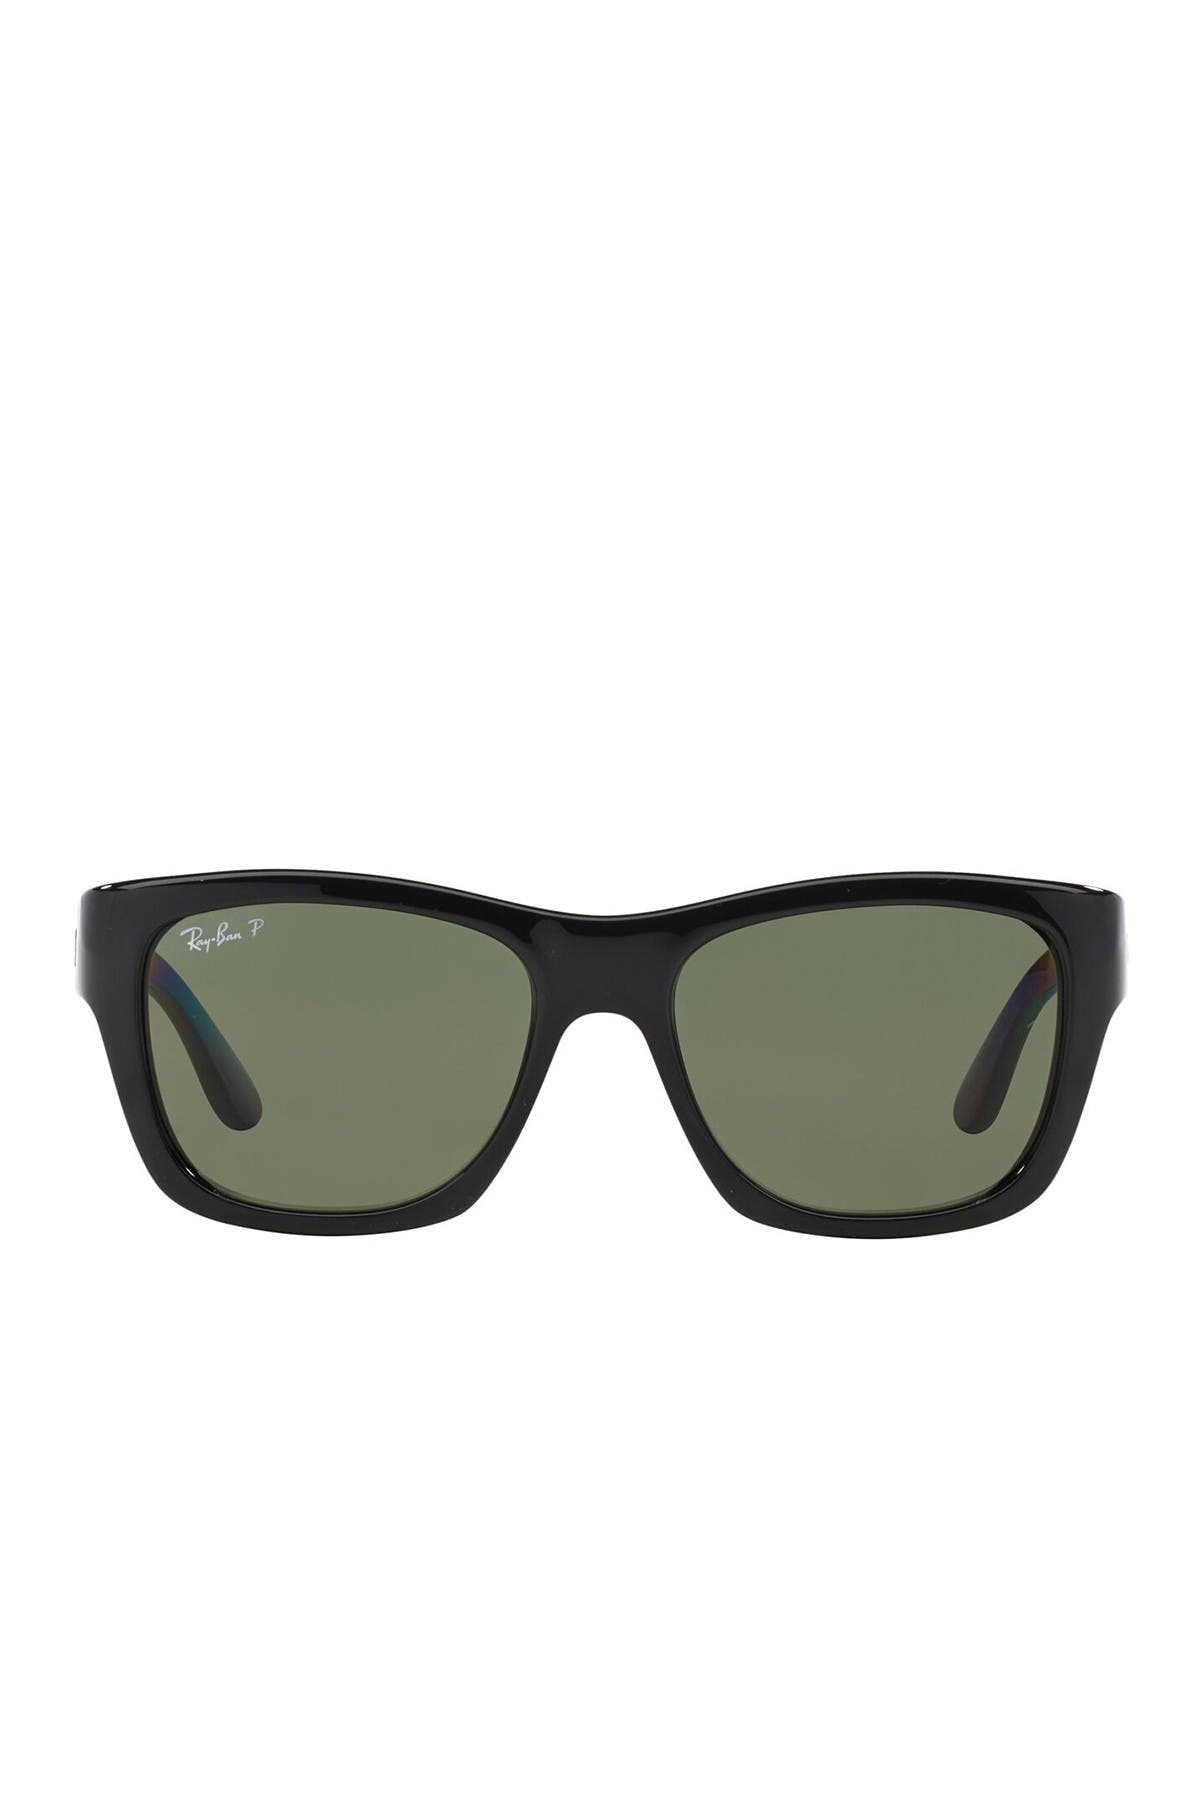 buy wayfarer sunglasses